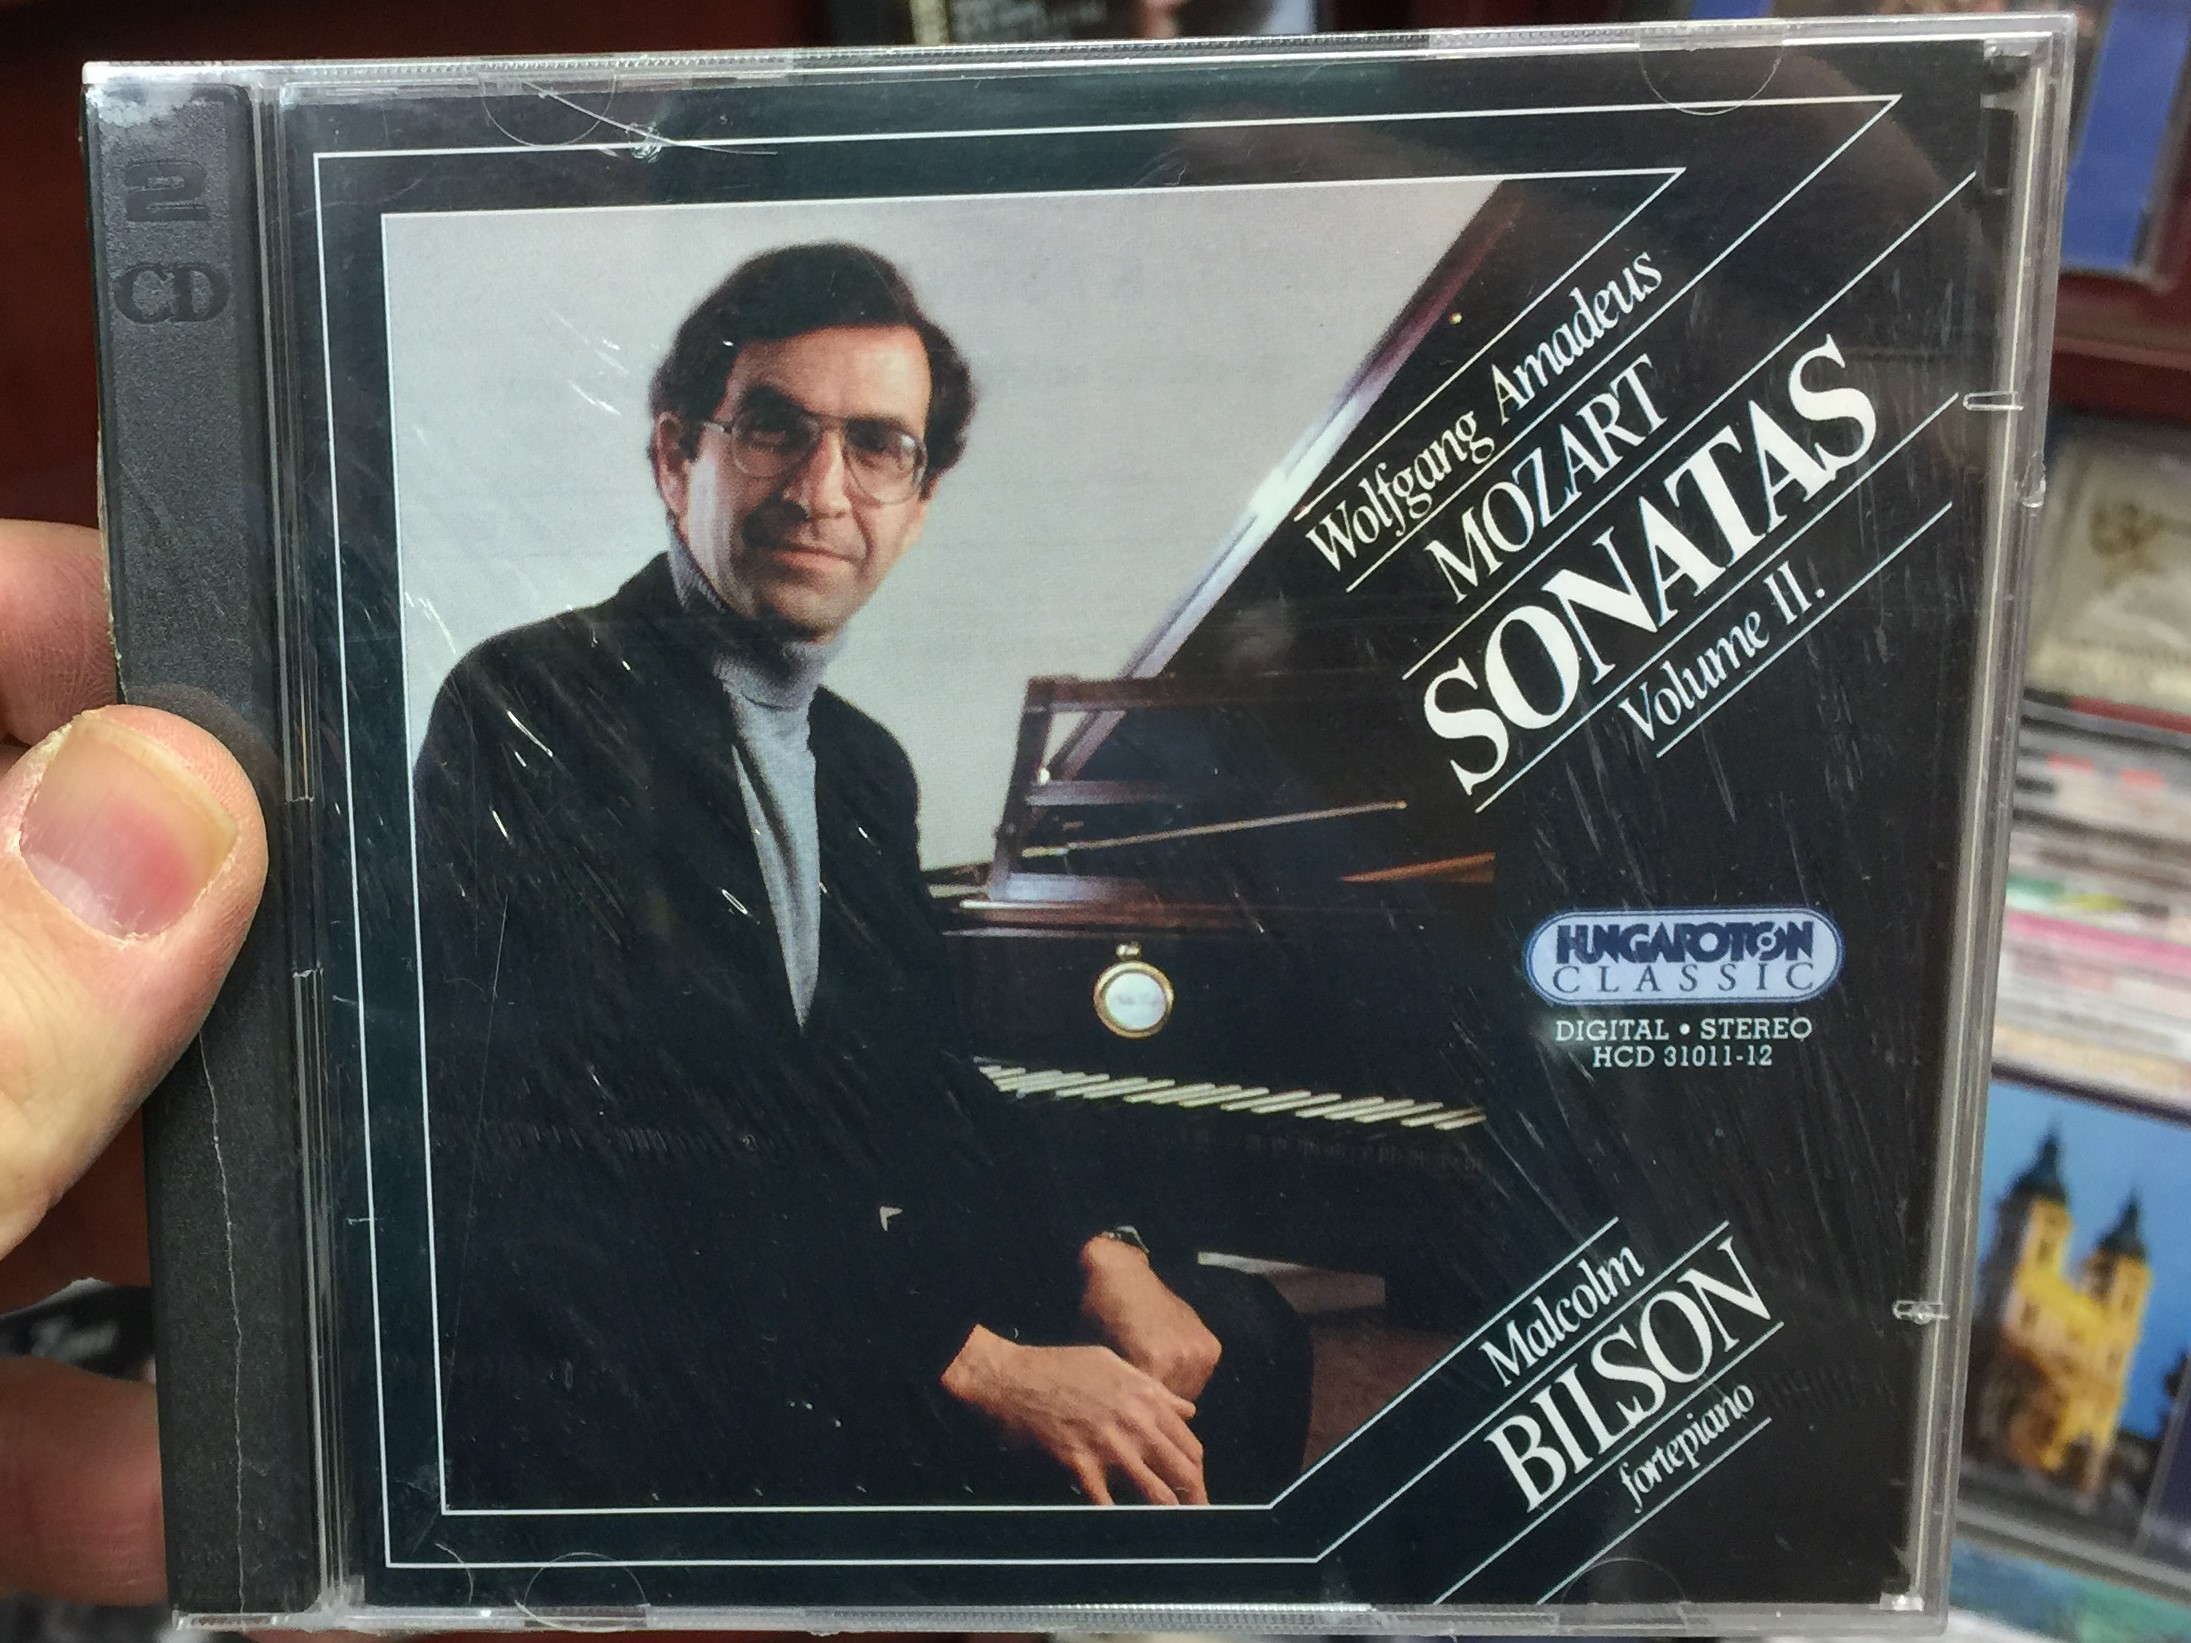 wolfgang-amadeus-mozart-sonatas-volume-ii.-malcolm-bilson-fortepiano-hungaroton-classic-2x-audio-cd-1999-stereo-hcd-31011-12-1-.jpg